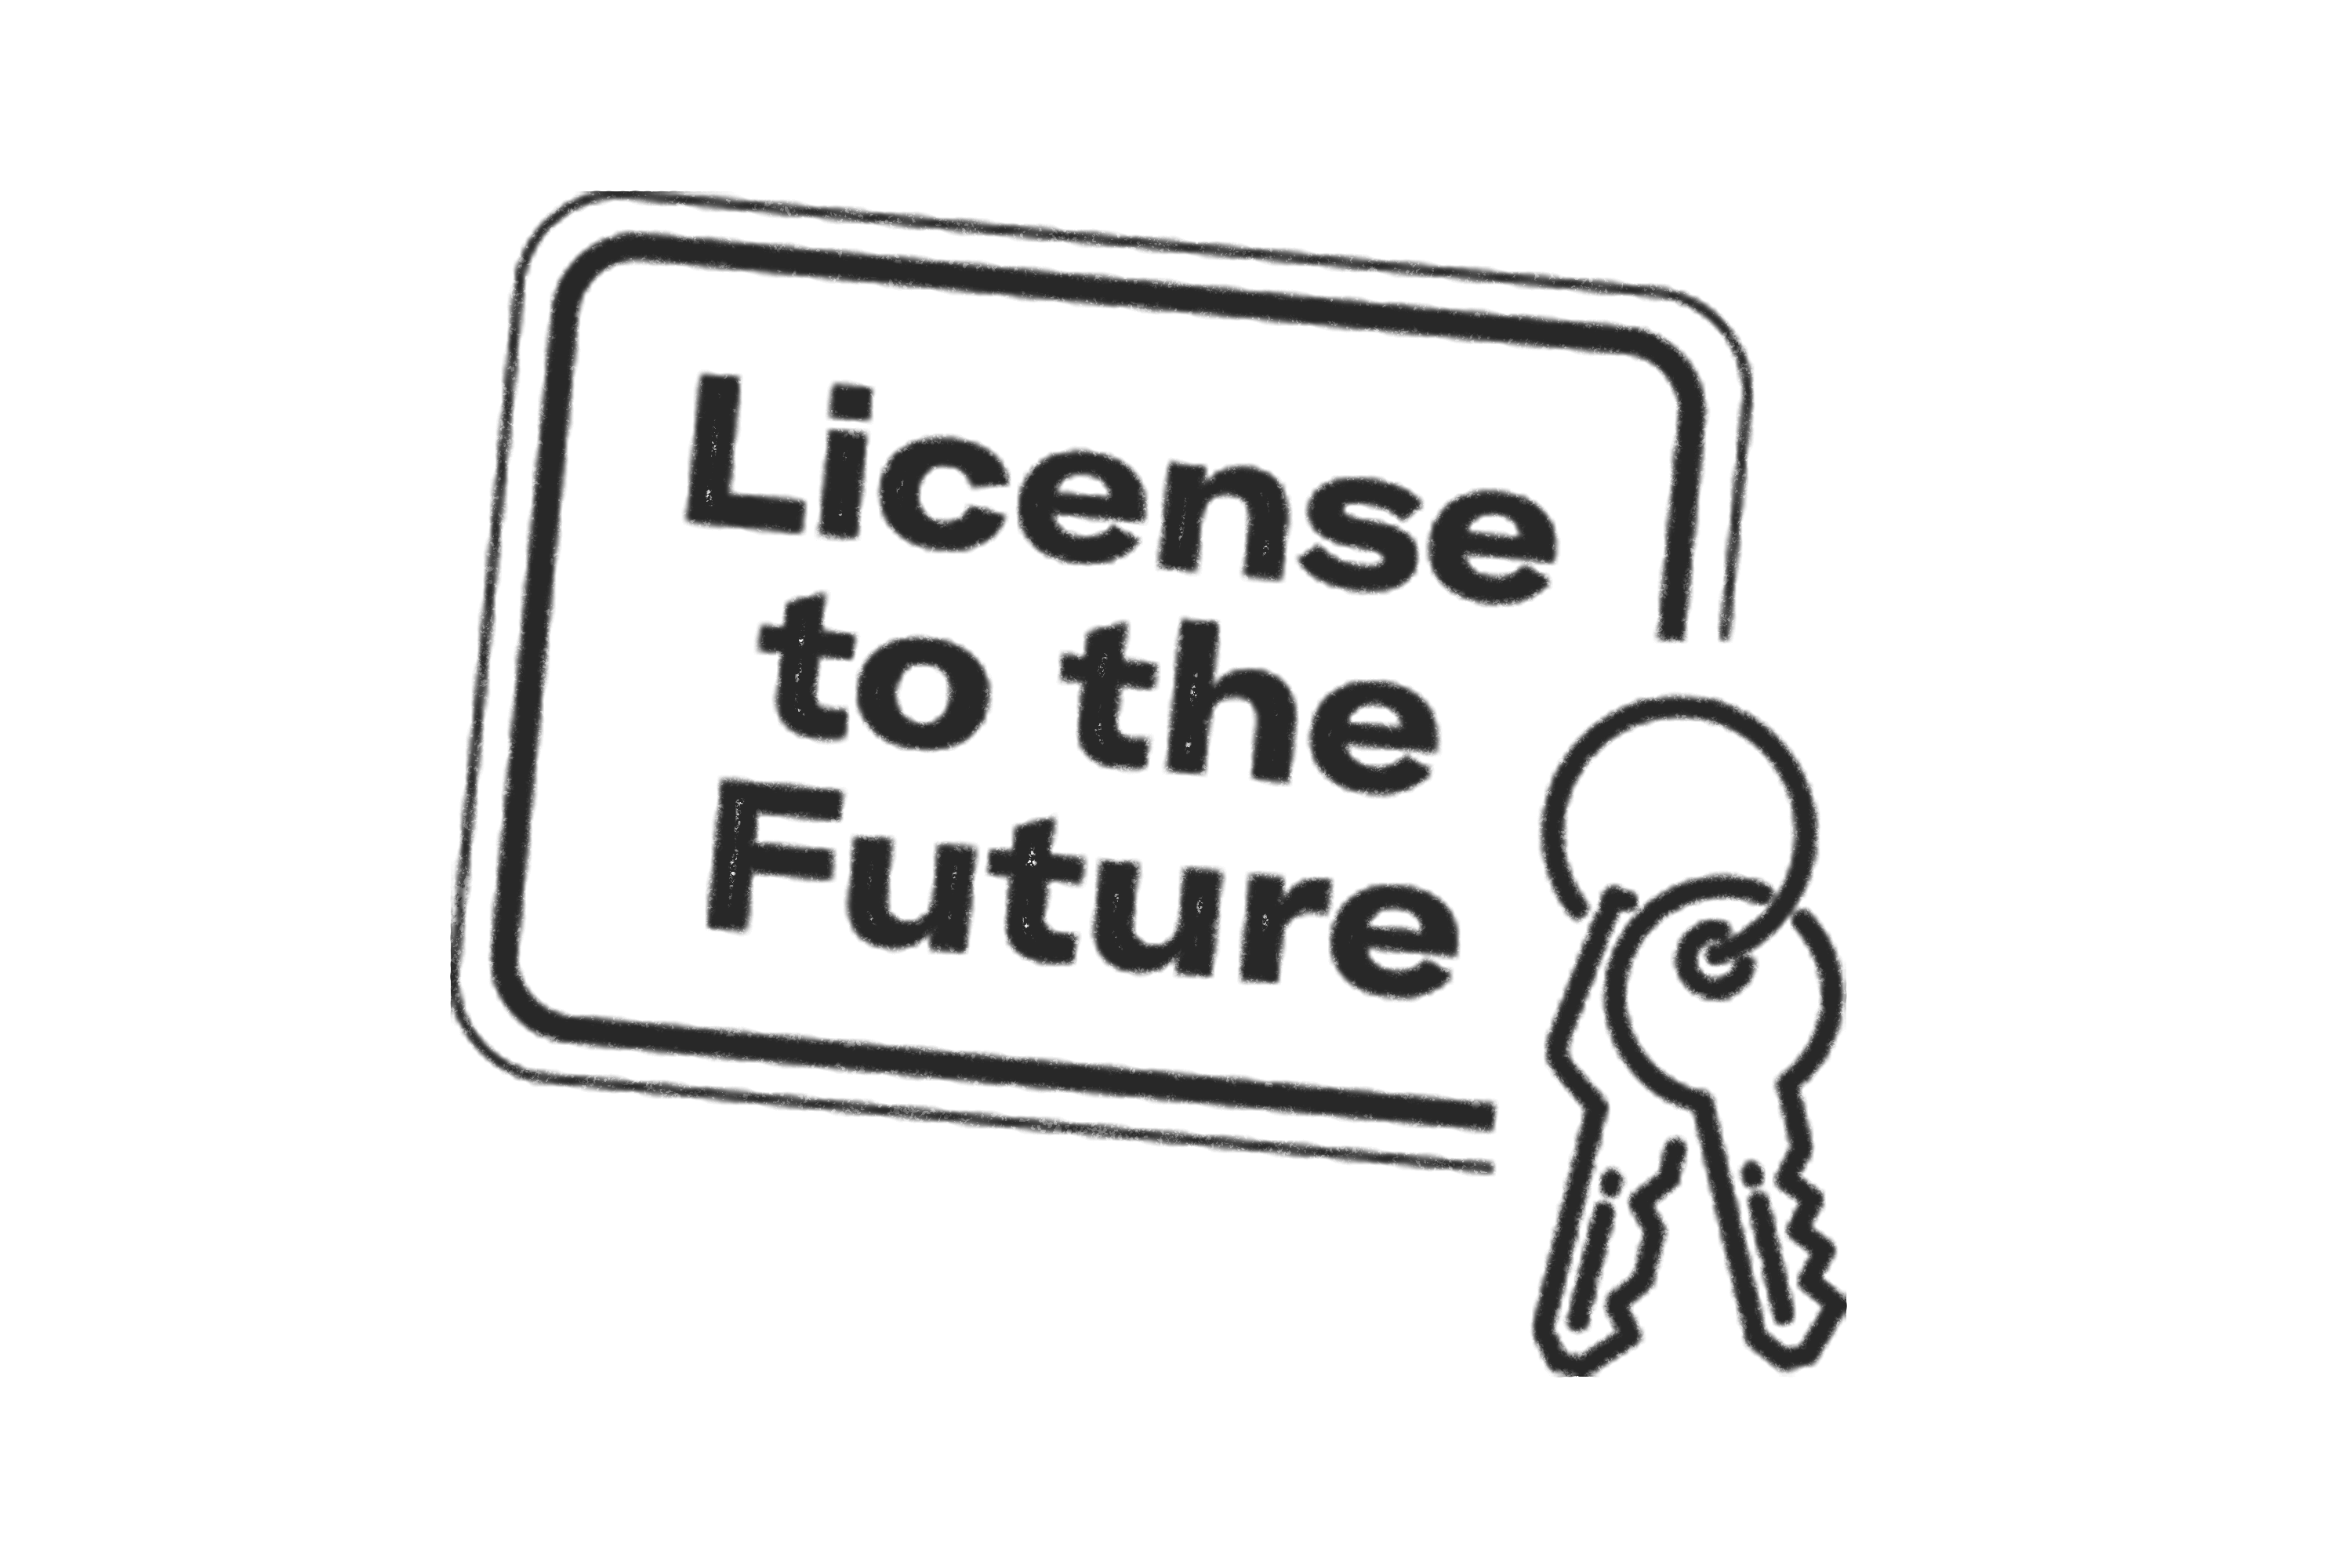 license to the future logo